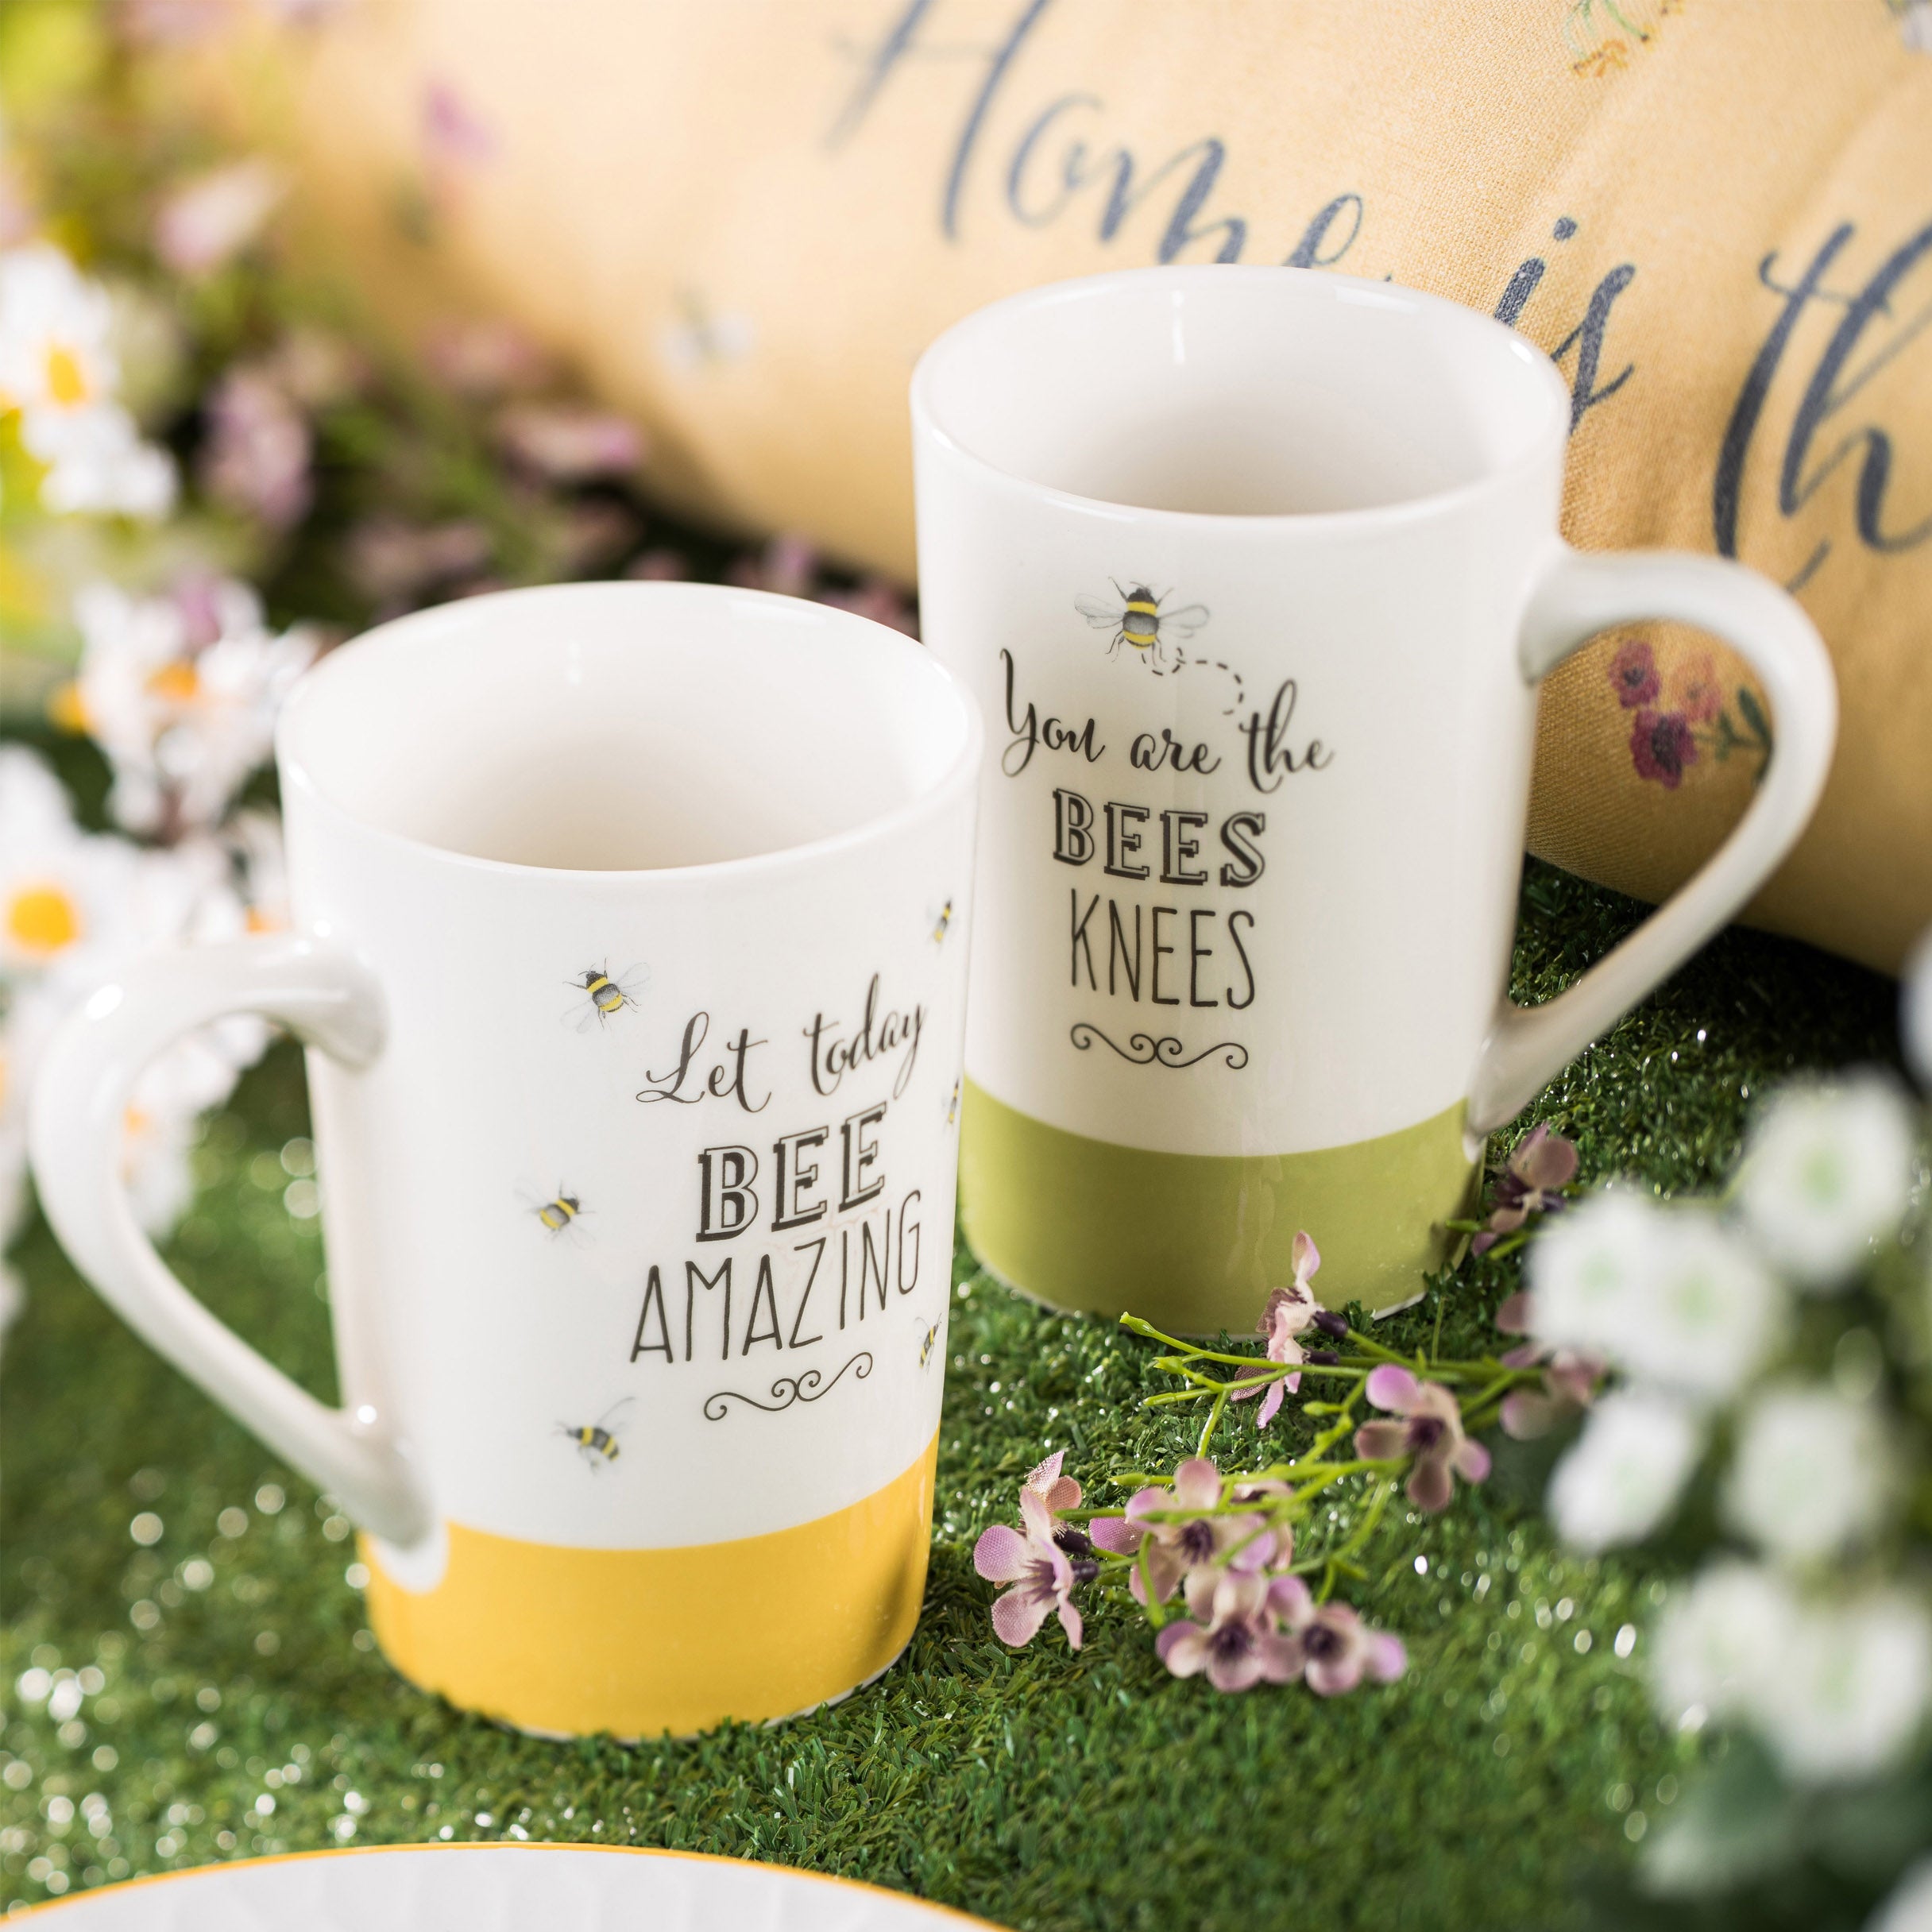 The English Tableware Company Bee Happy 'Let Today Bee Amazing' Yellow Latte Mug